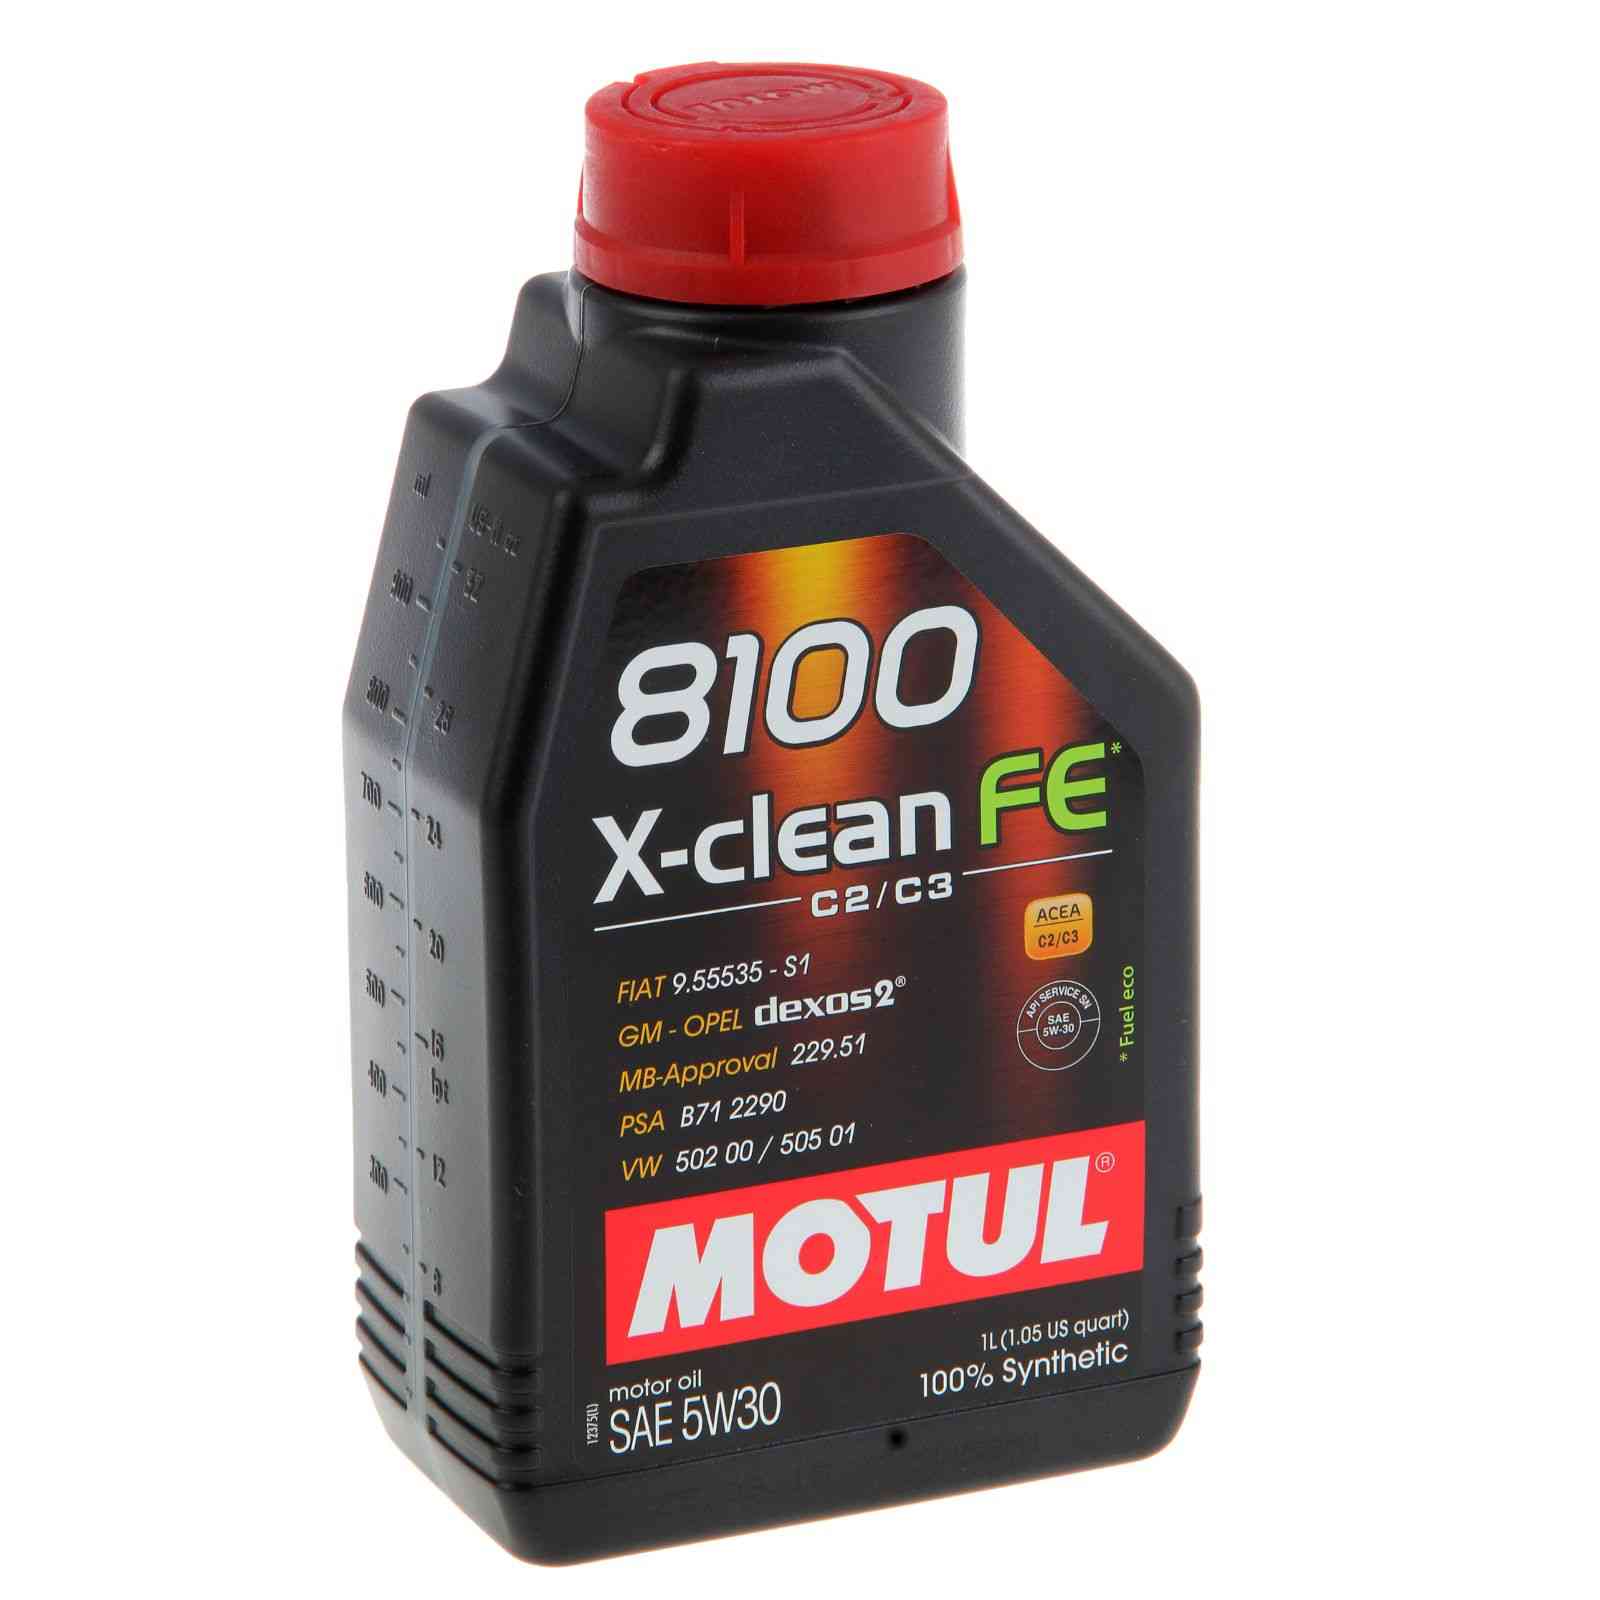 Motul 8100 X-clean FE 5W30 1 л